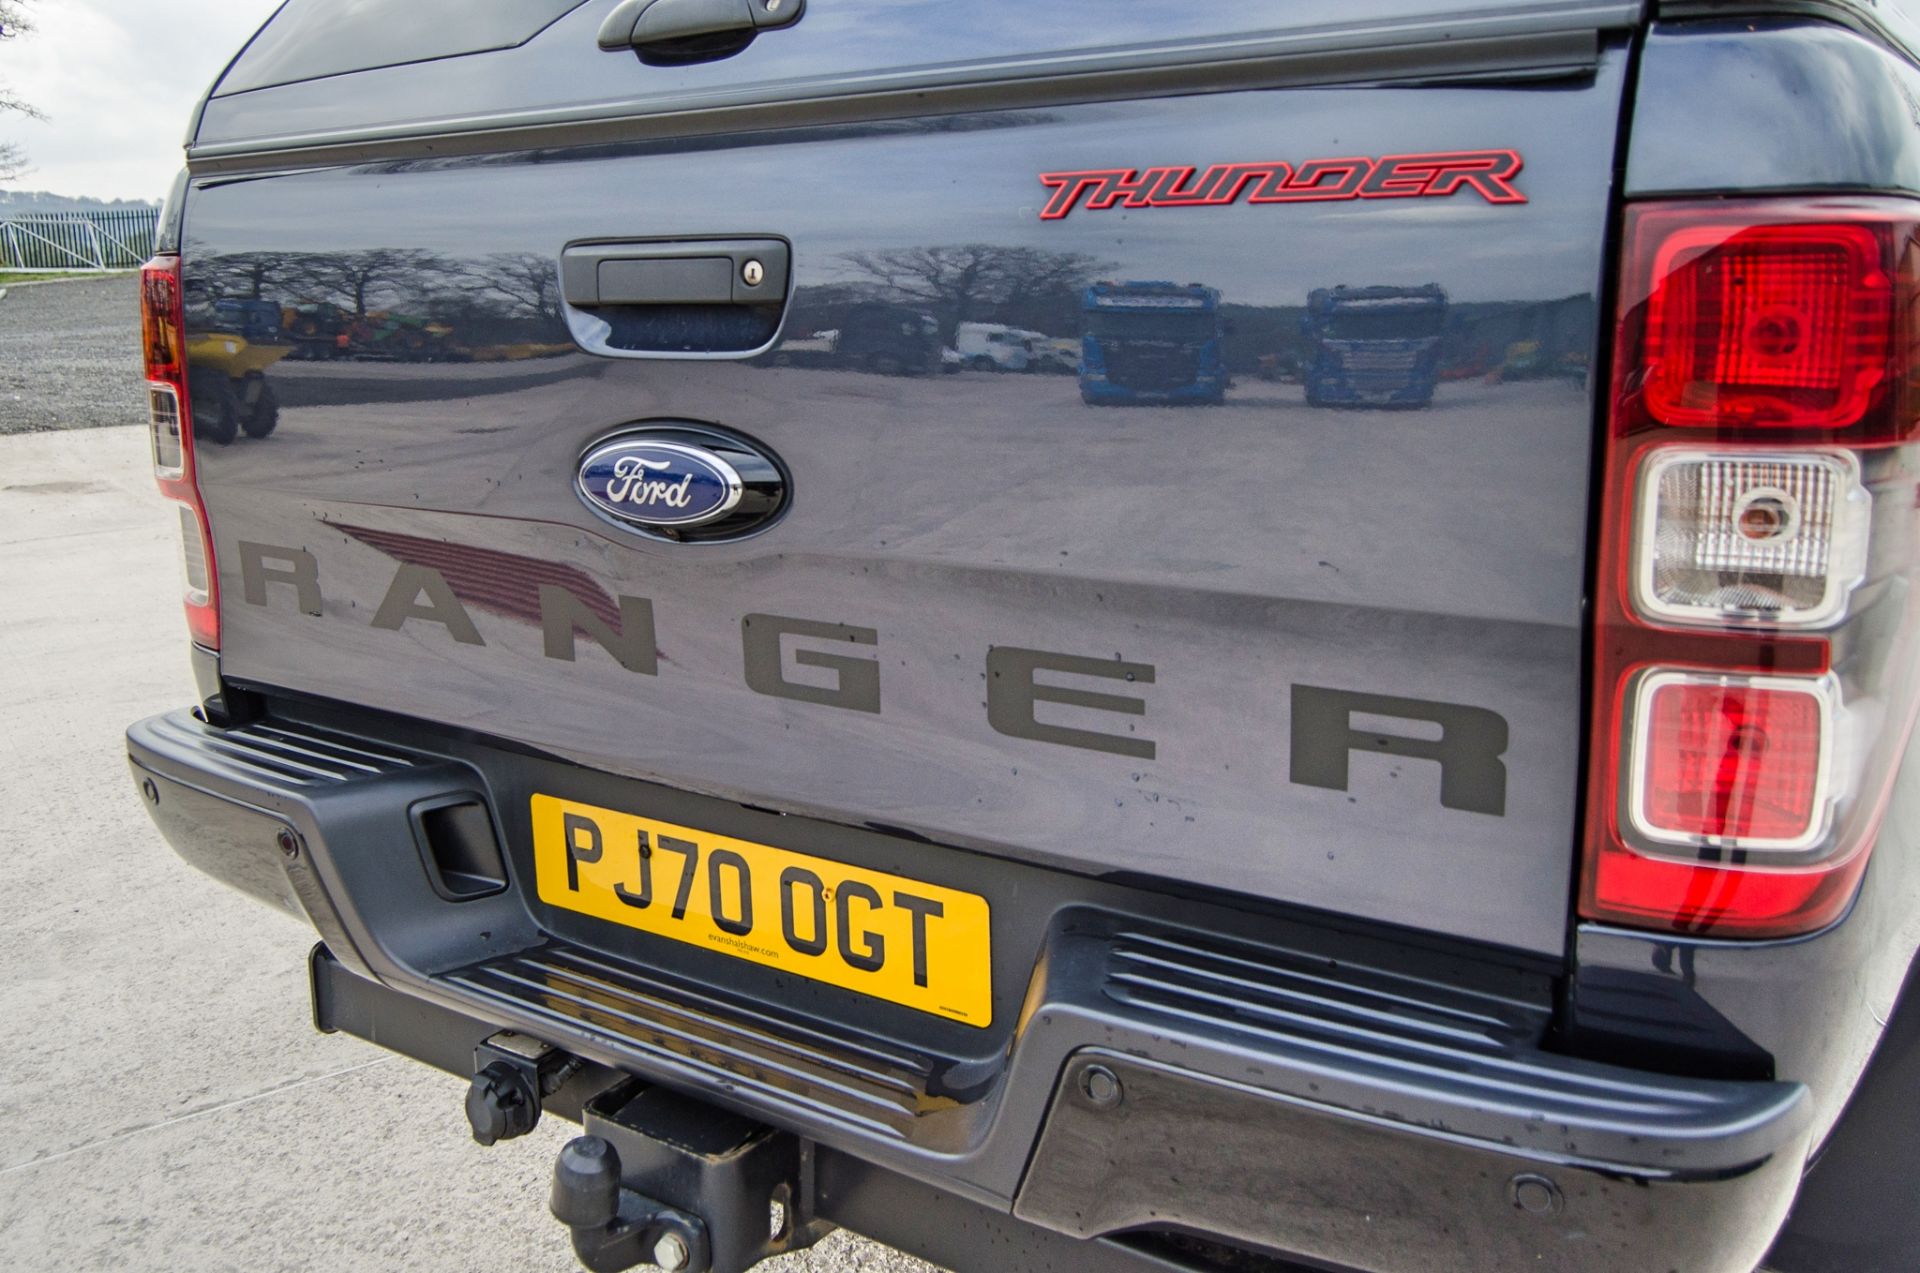 Ford Ranger Thunder 1996cc Ecoblue 4x4 automatic pick up Registration Number: PJ70 OGT Date of - Image 13 of 35